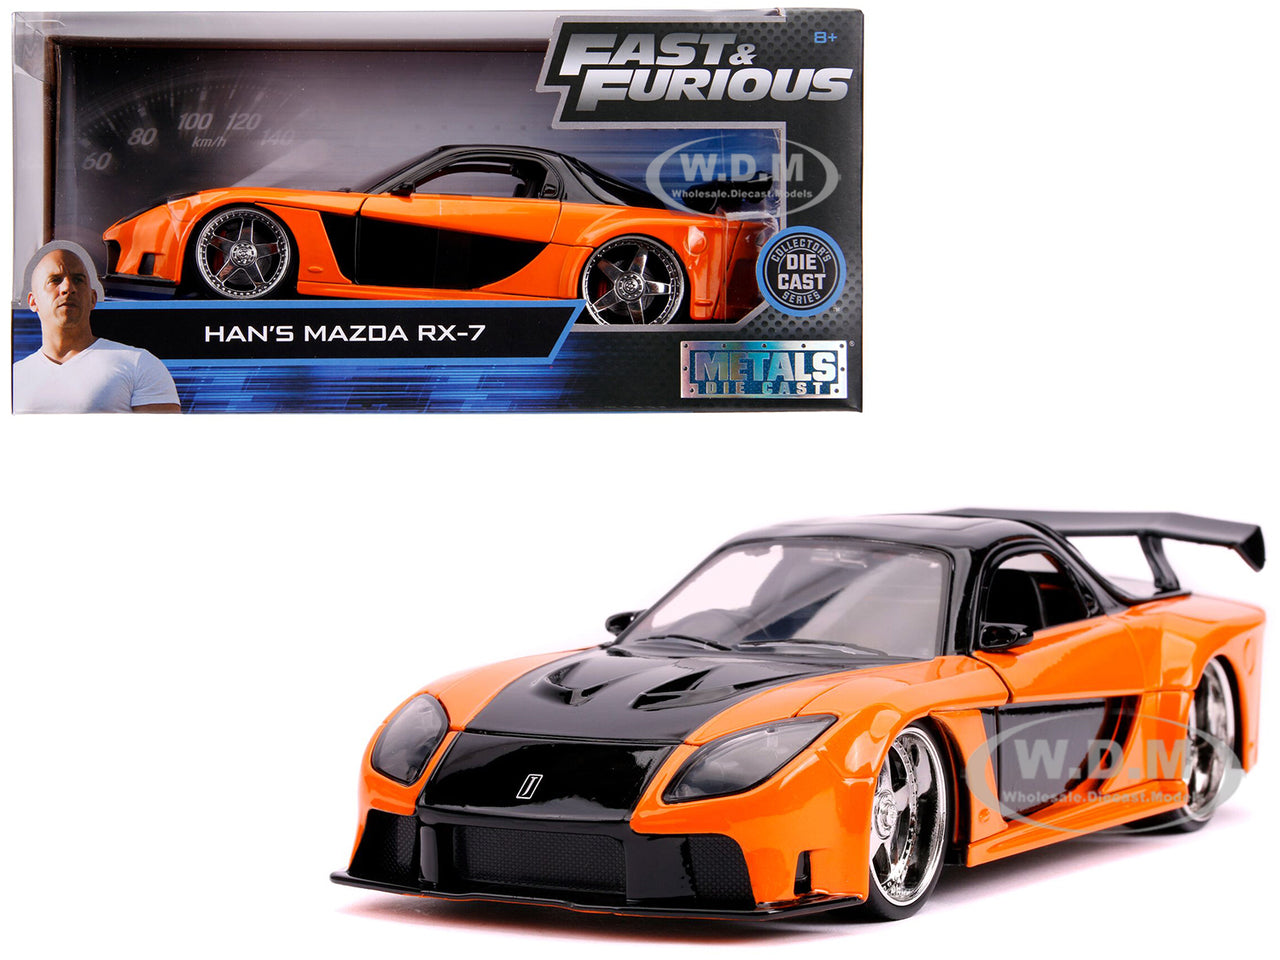 1:24 Fast & Furious Han's Mazda RX-7